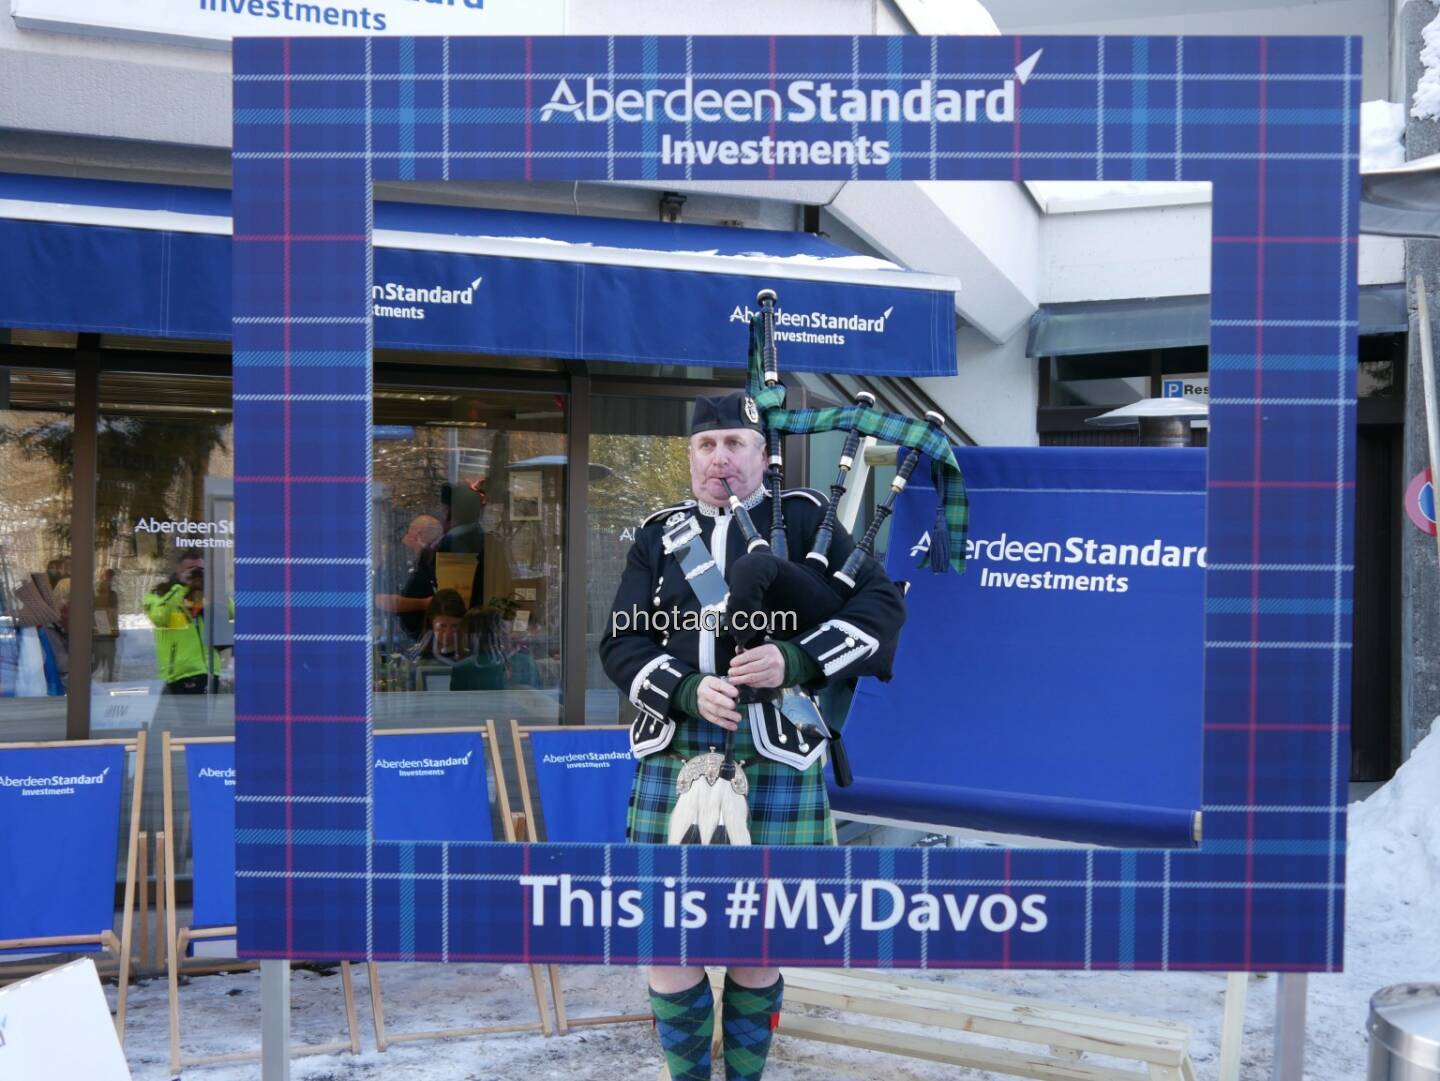 Aberdeen Standard, Dudelsack